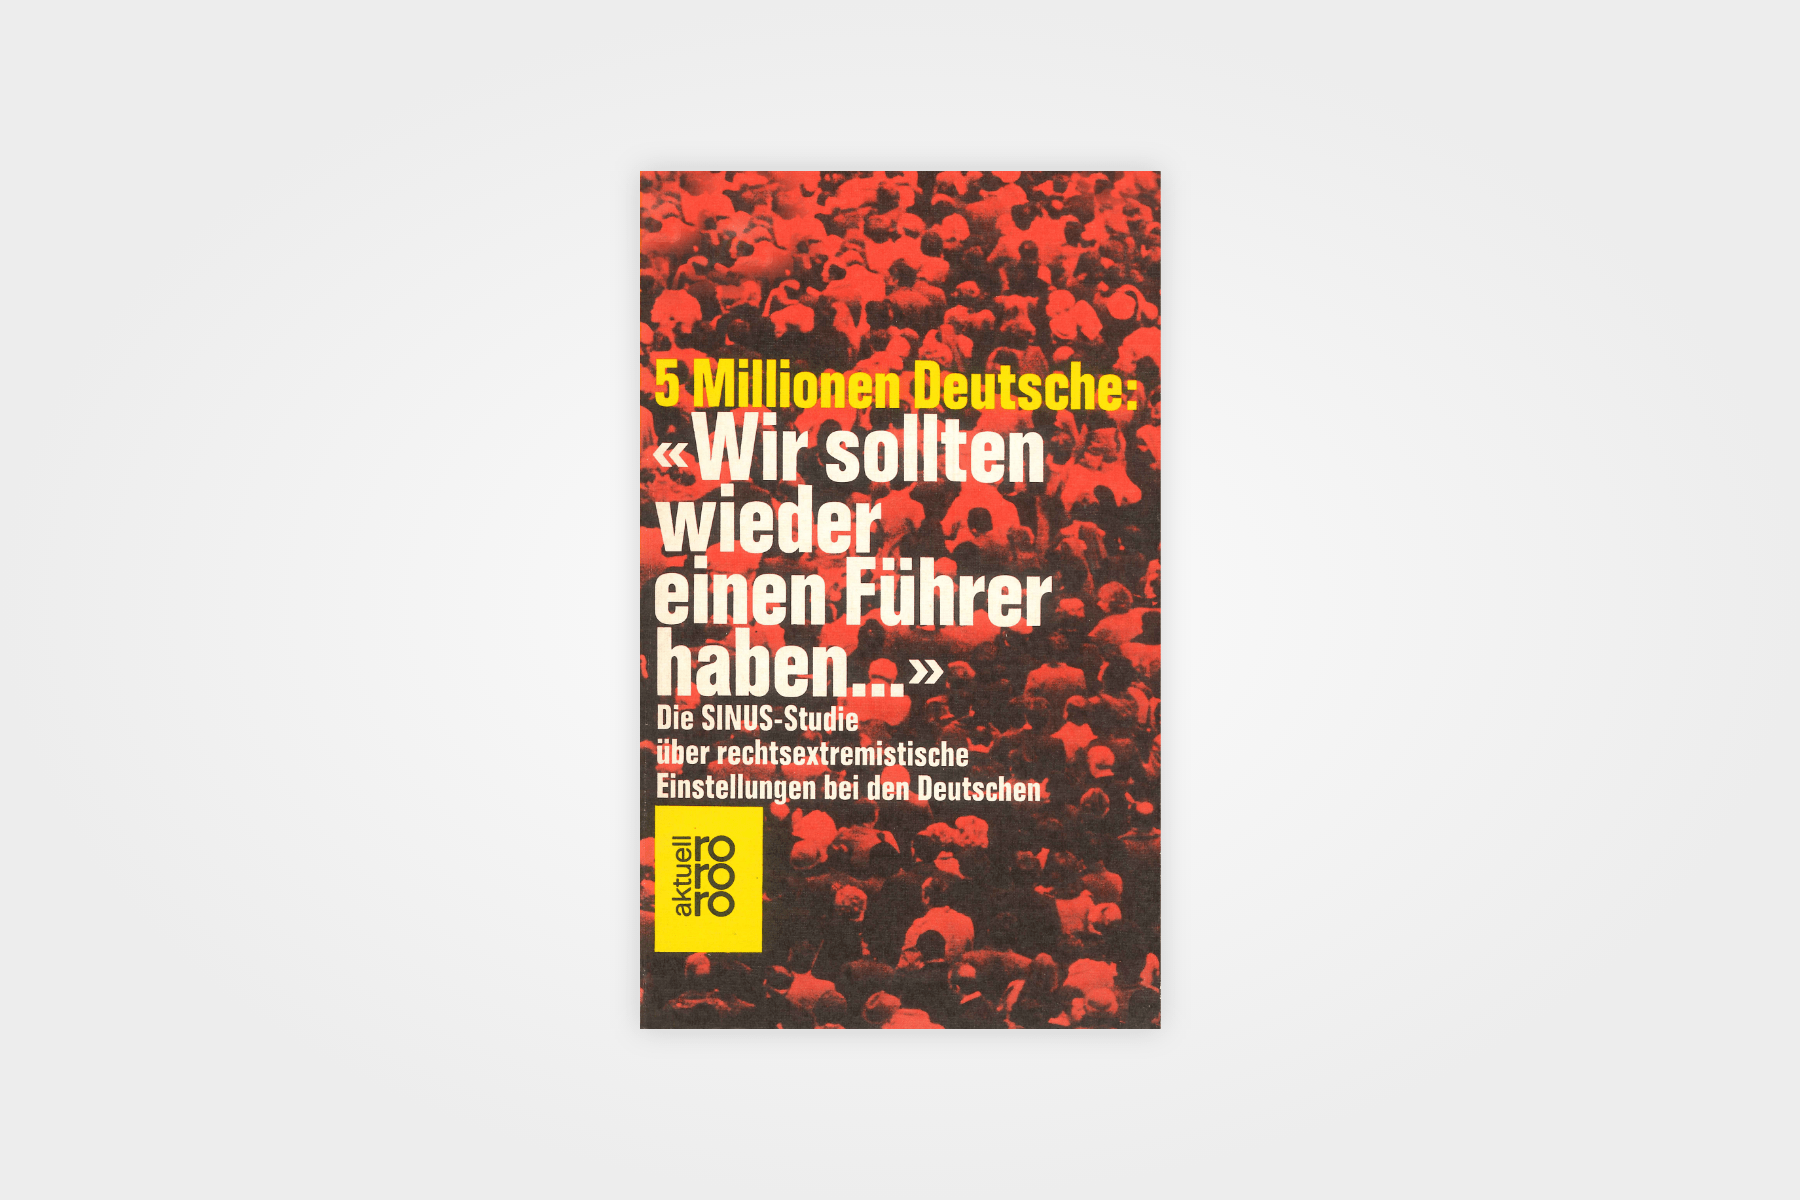 Five Million Germans: “It’s time we had a ‘Führer‘ again...”